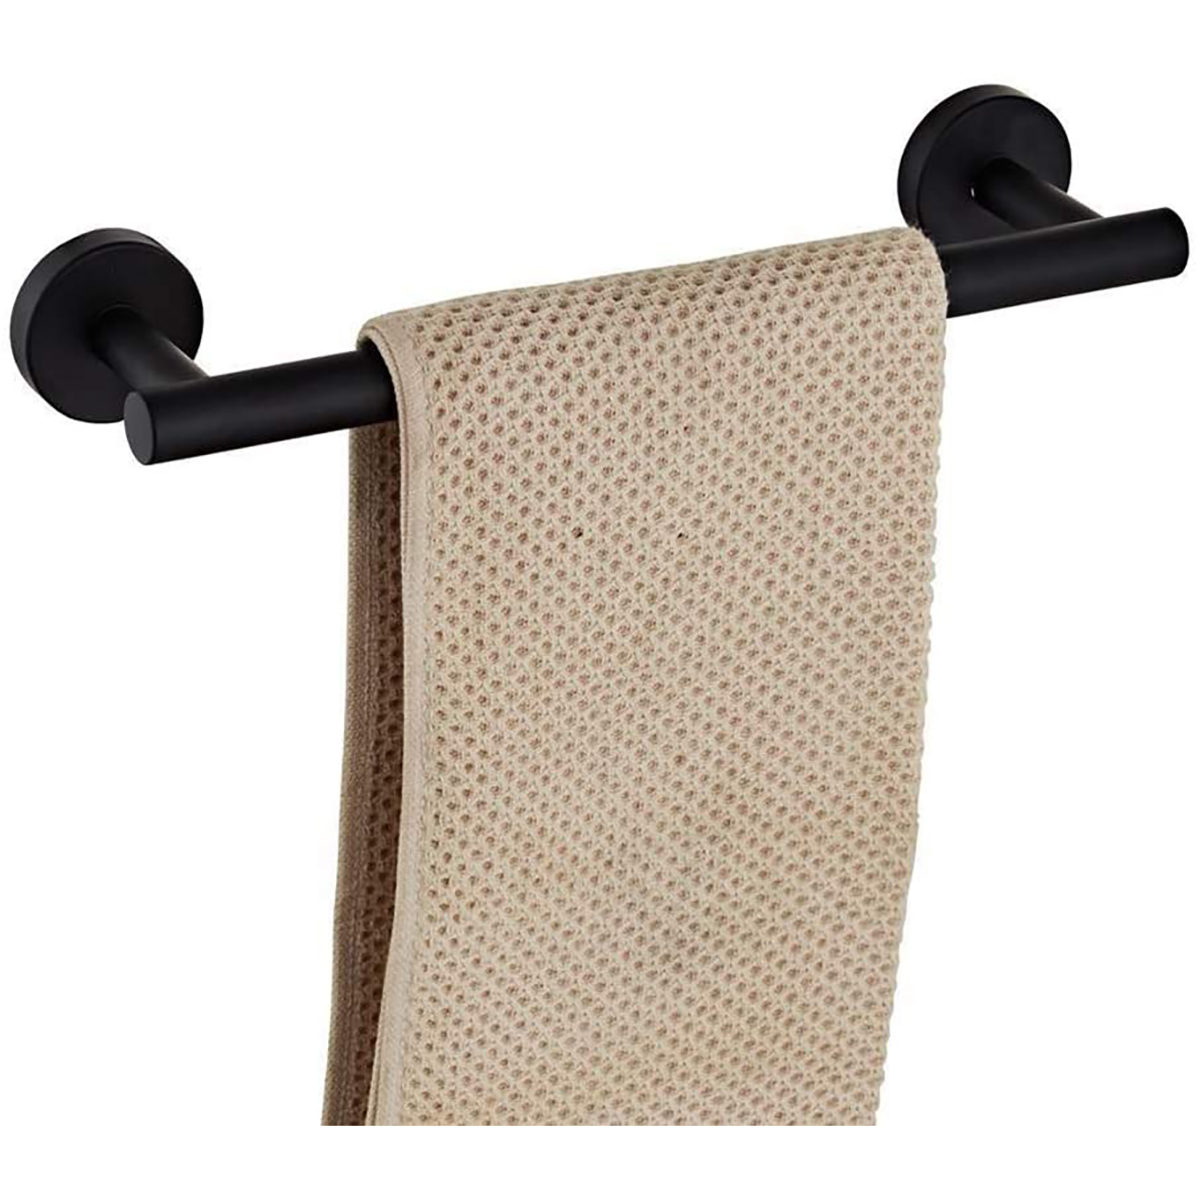 Towel Rack 304 Stainless Steel Toilet Paper Roll Holder Shelf Bathroom Washroom 7